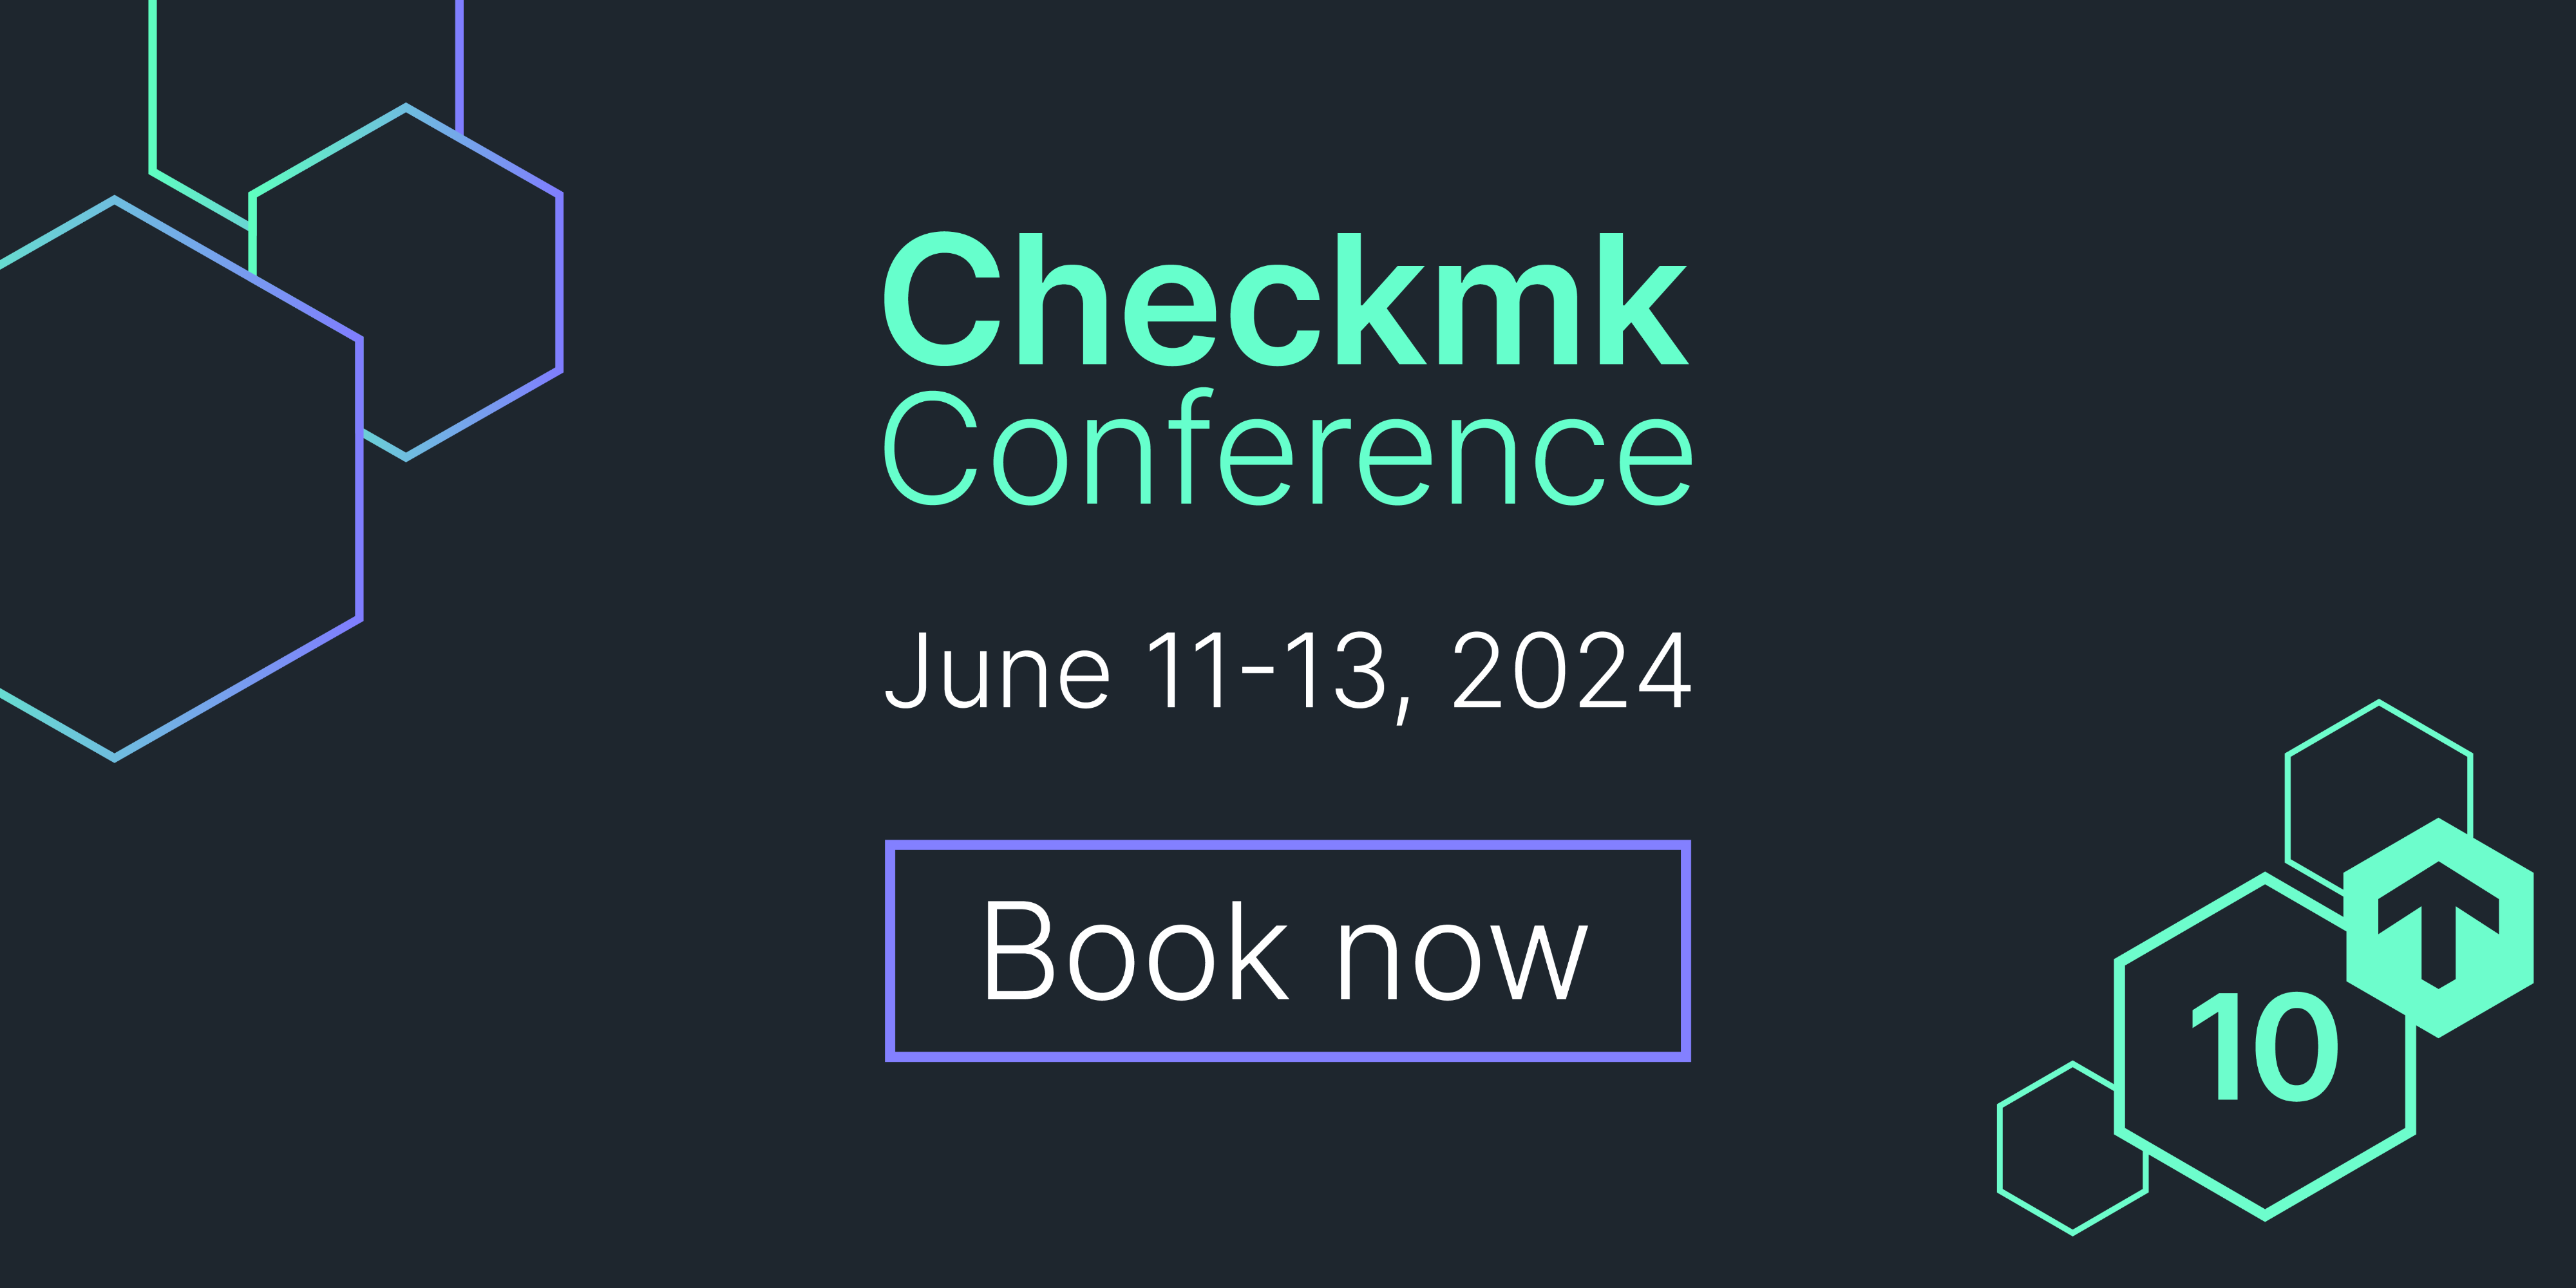 checkmk conference 10 information